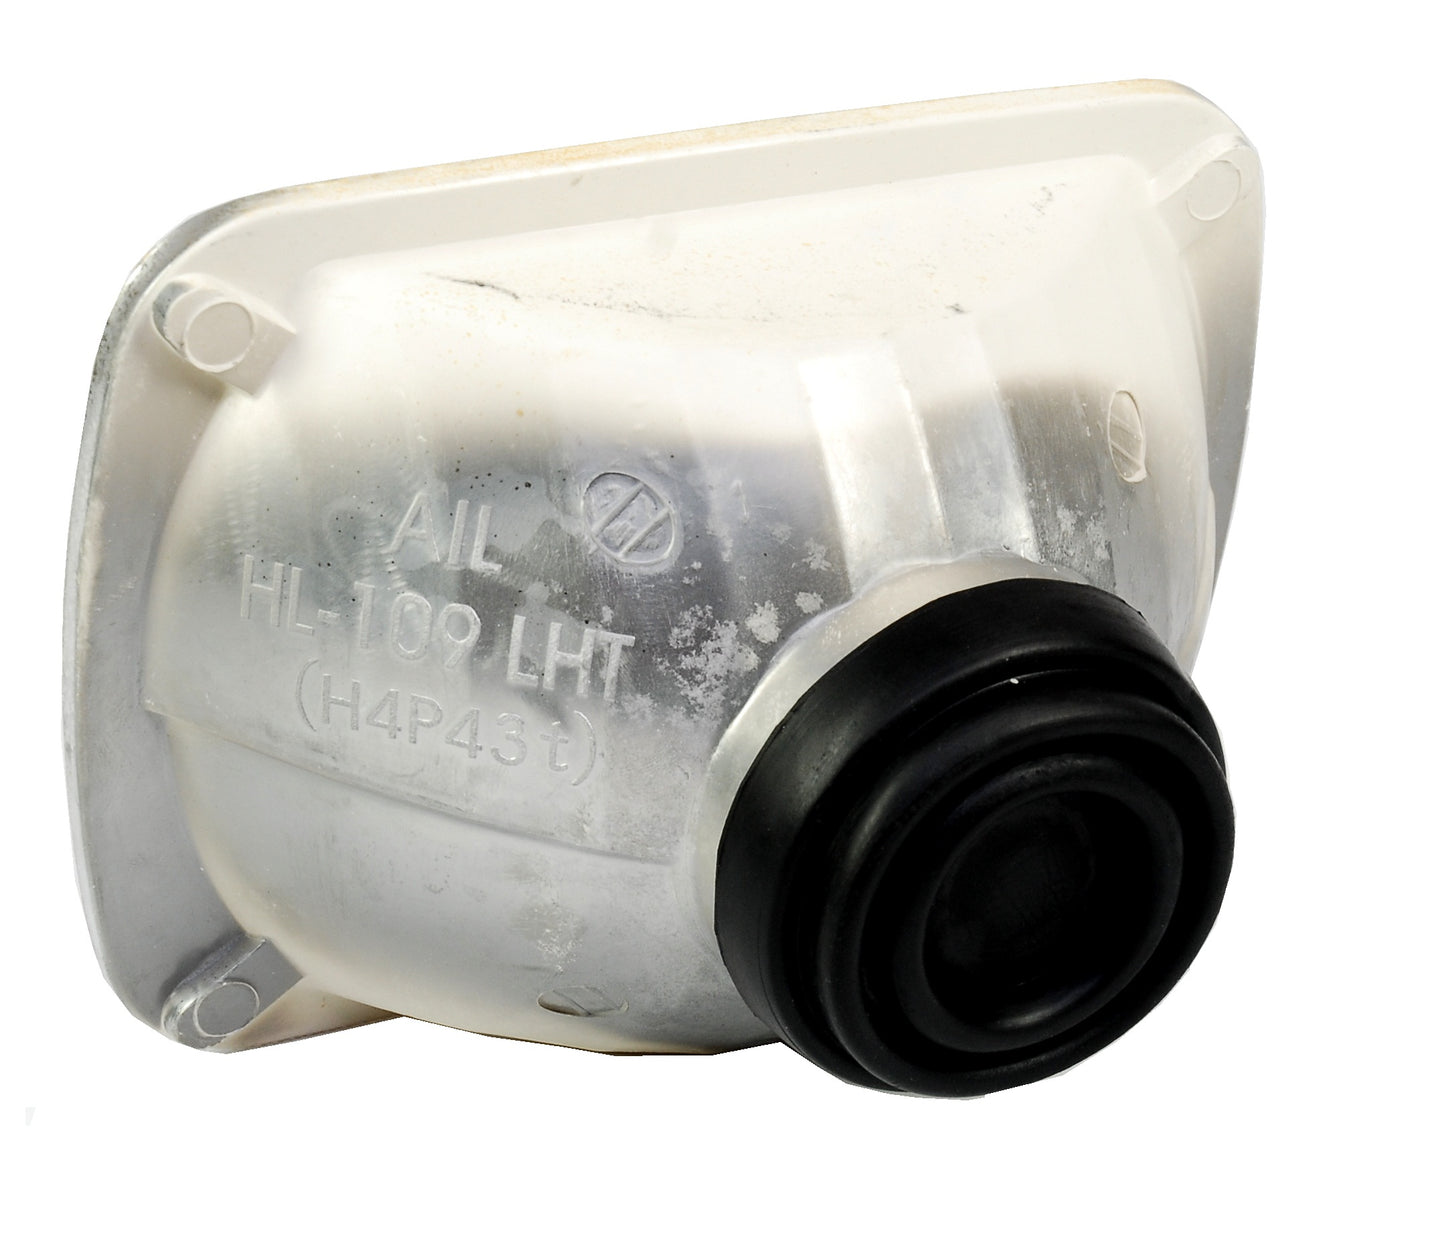 Crystal Halogen Headlight Kit (Pair) with E Mark - RHD